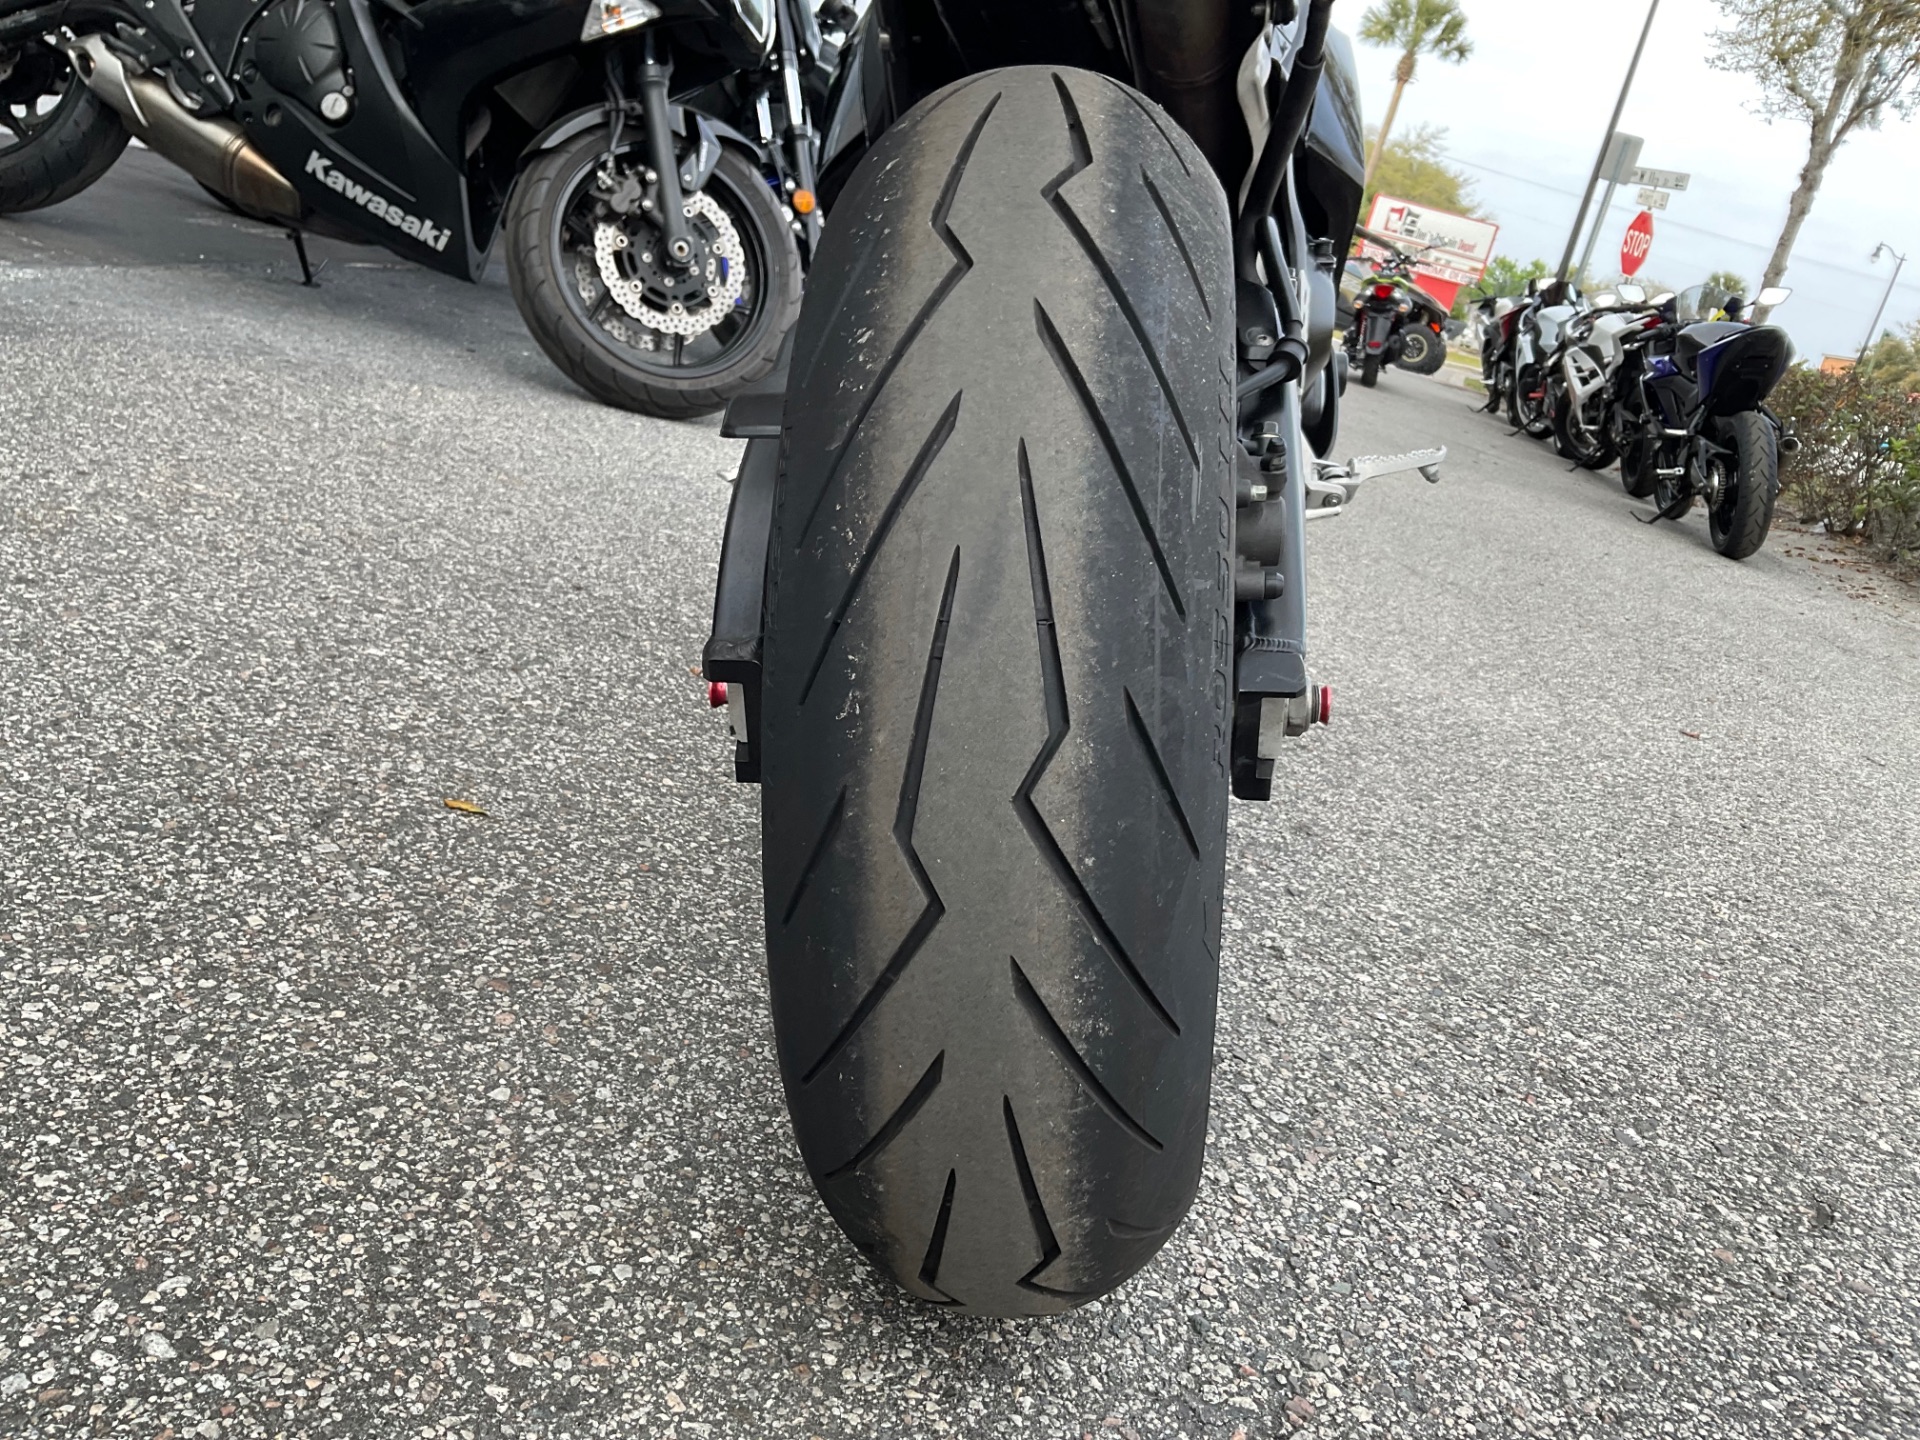 2019 Honda CBR600RR in Sanford, Florida - Photo 20